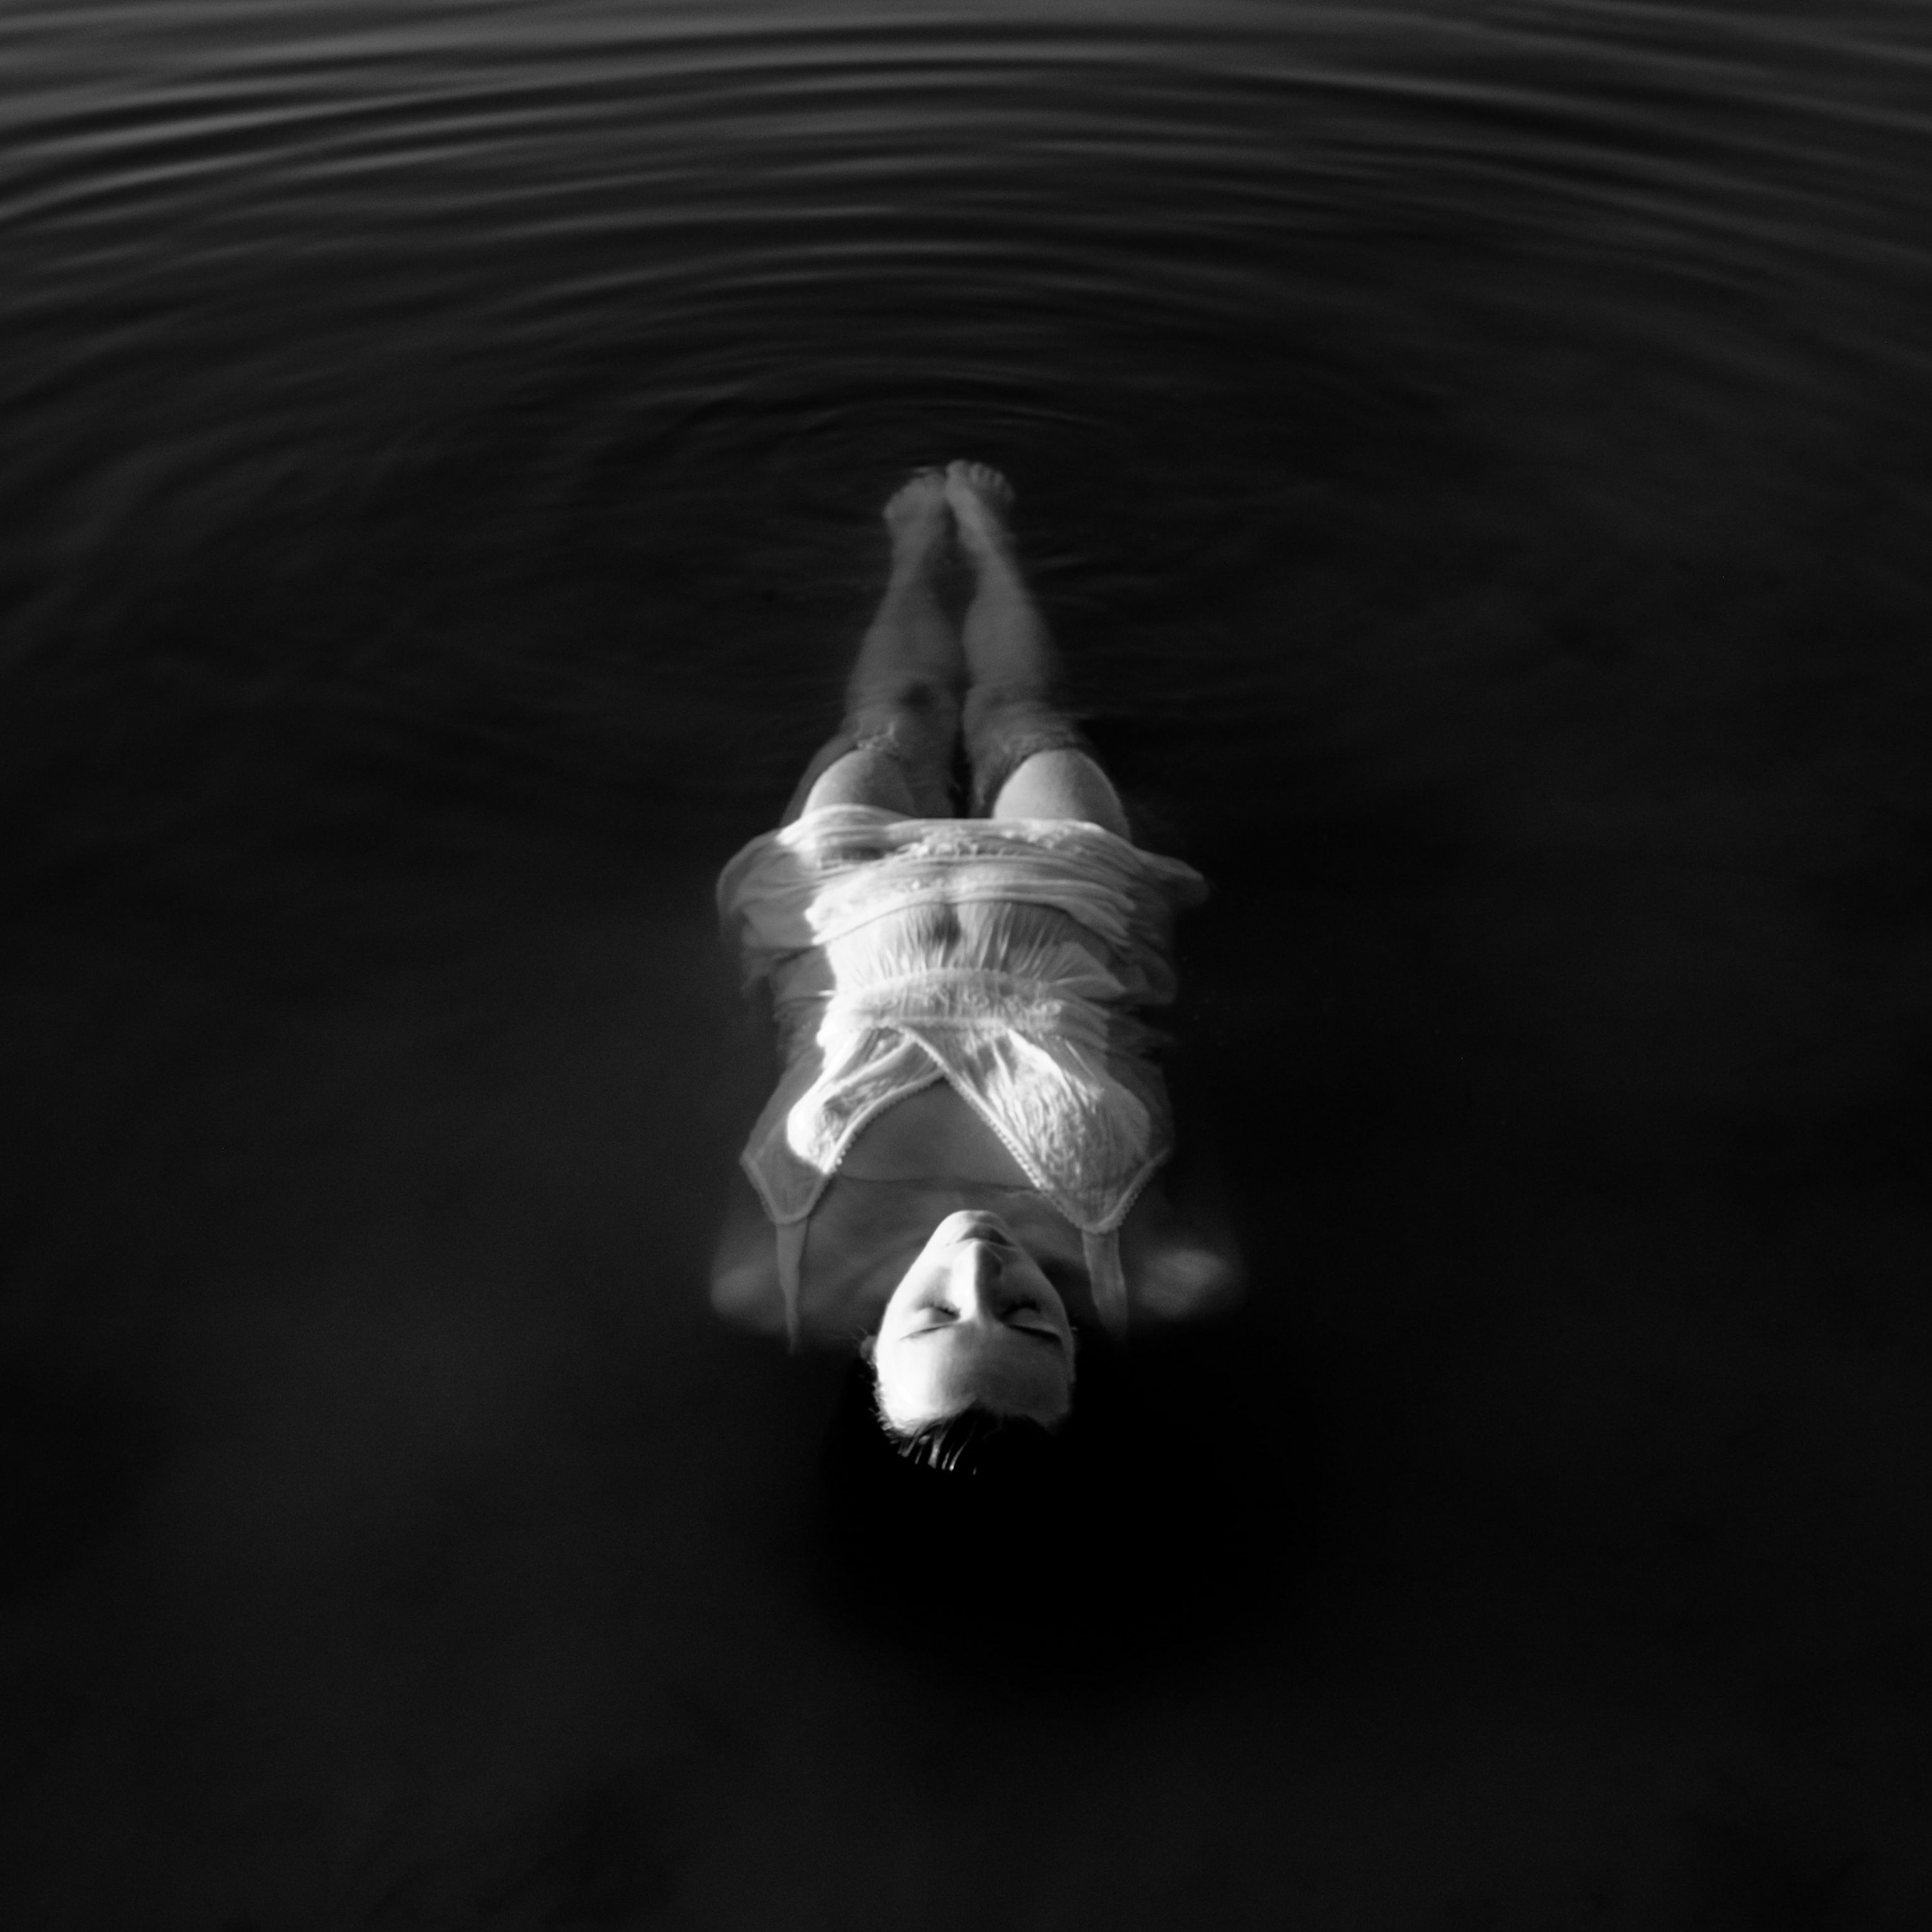 ”Floating in Feeling” by Mark Pratt-Russum